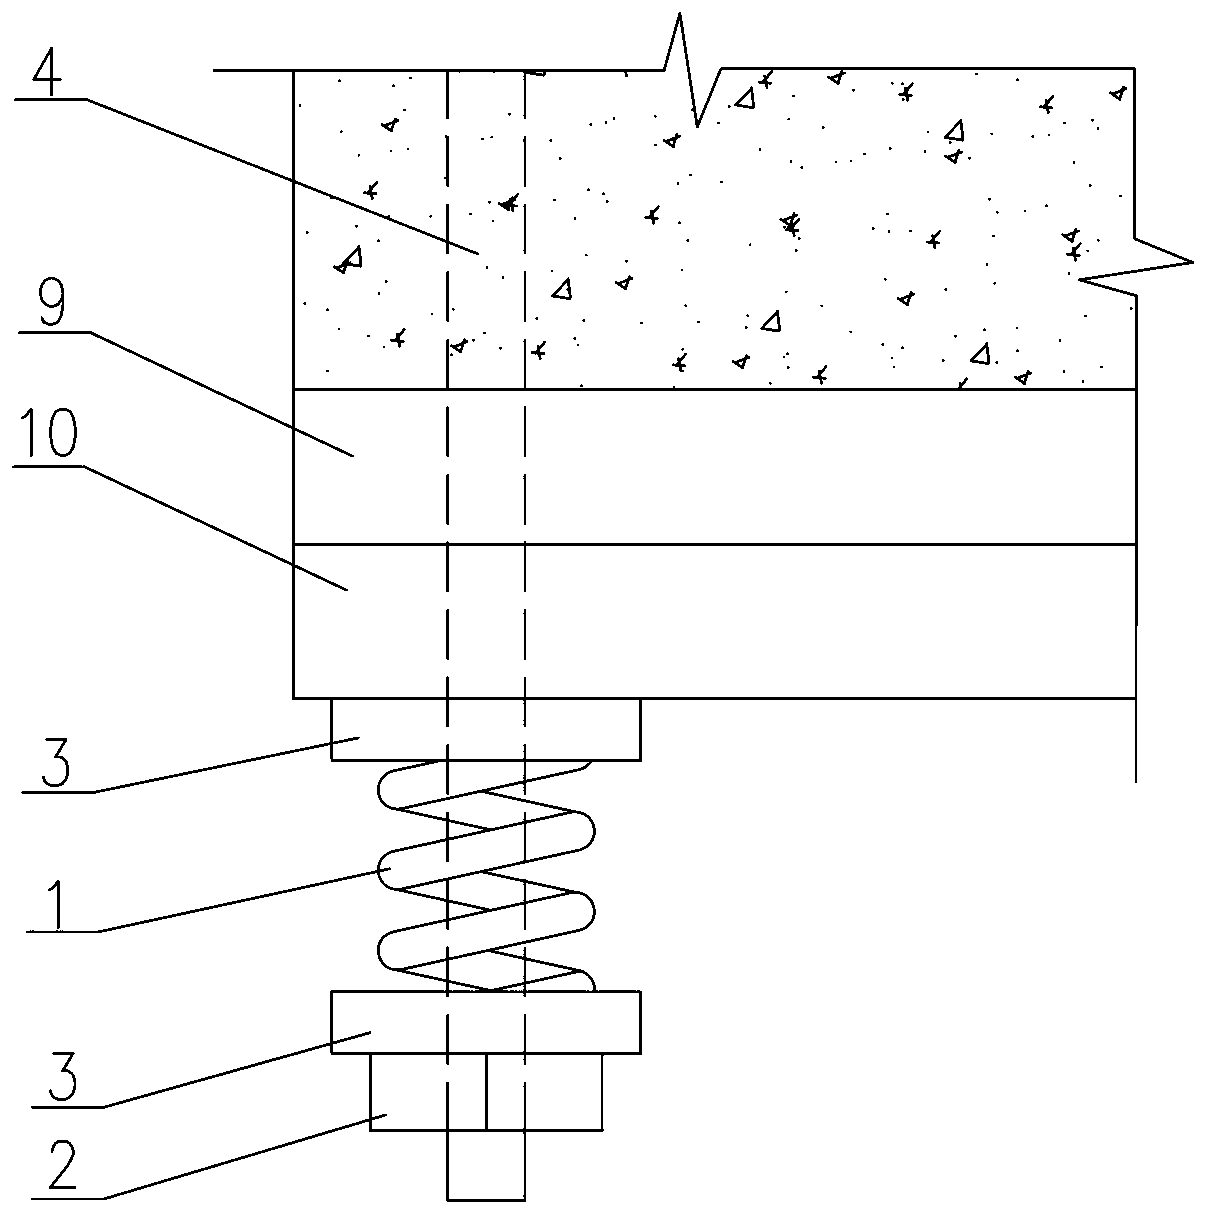 Vertical micro-tensile isolation bearing